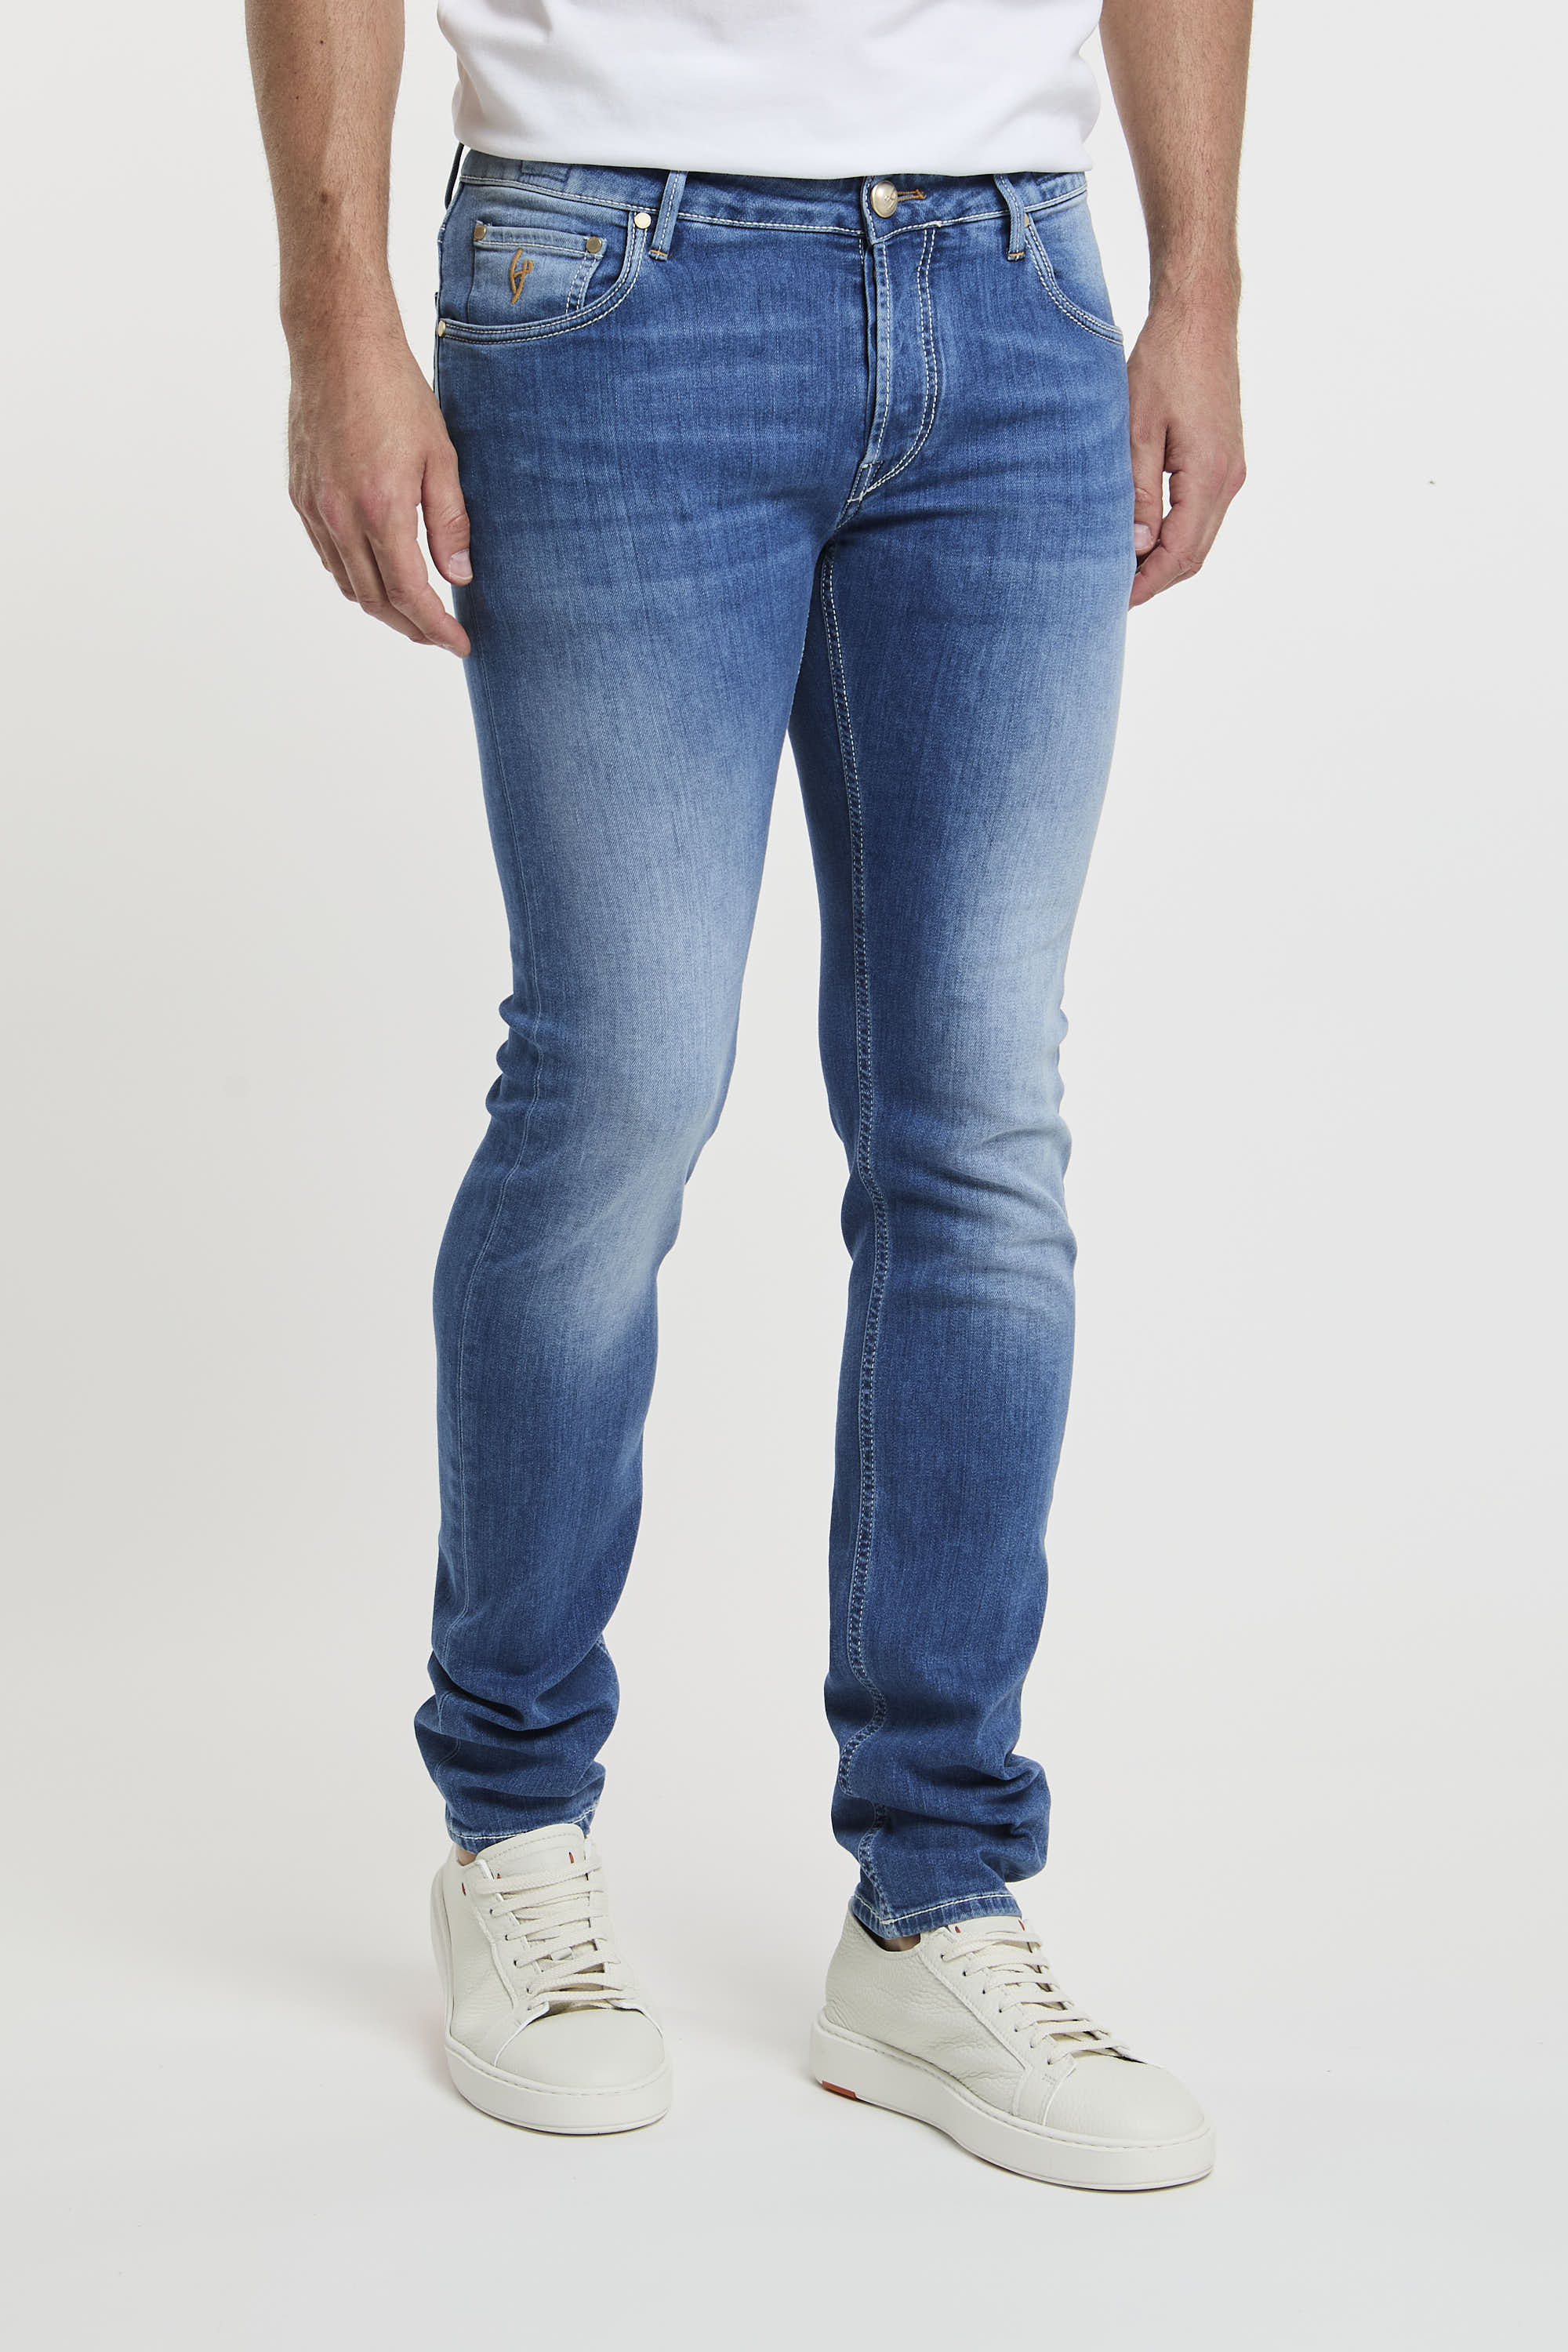 Handpicked Jeans Orvieto Cotton/Elastomultiester Denim-3